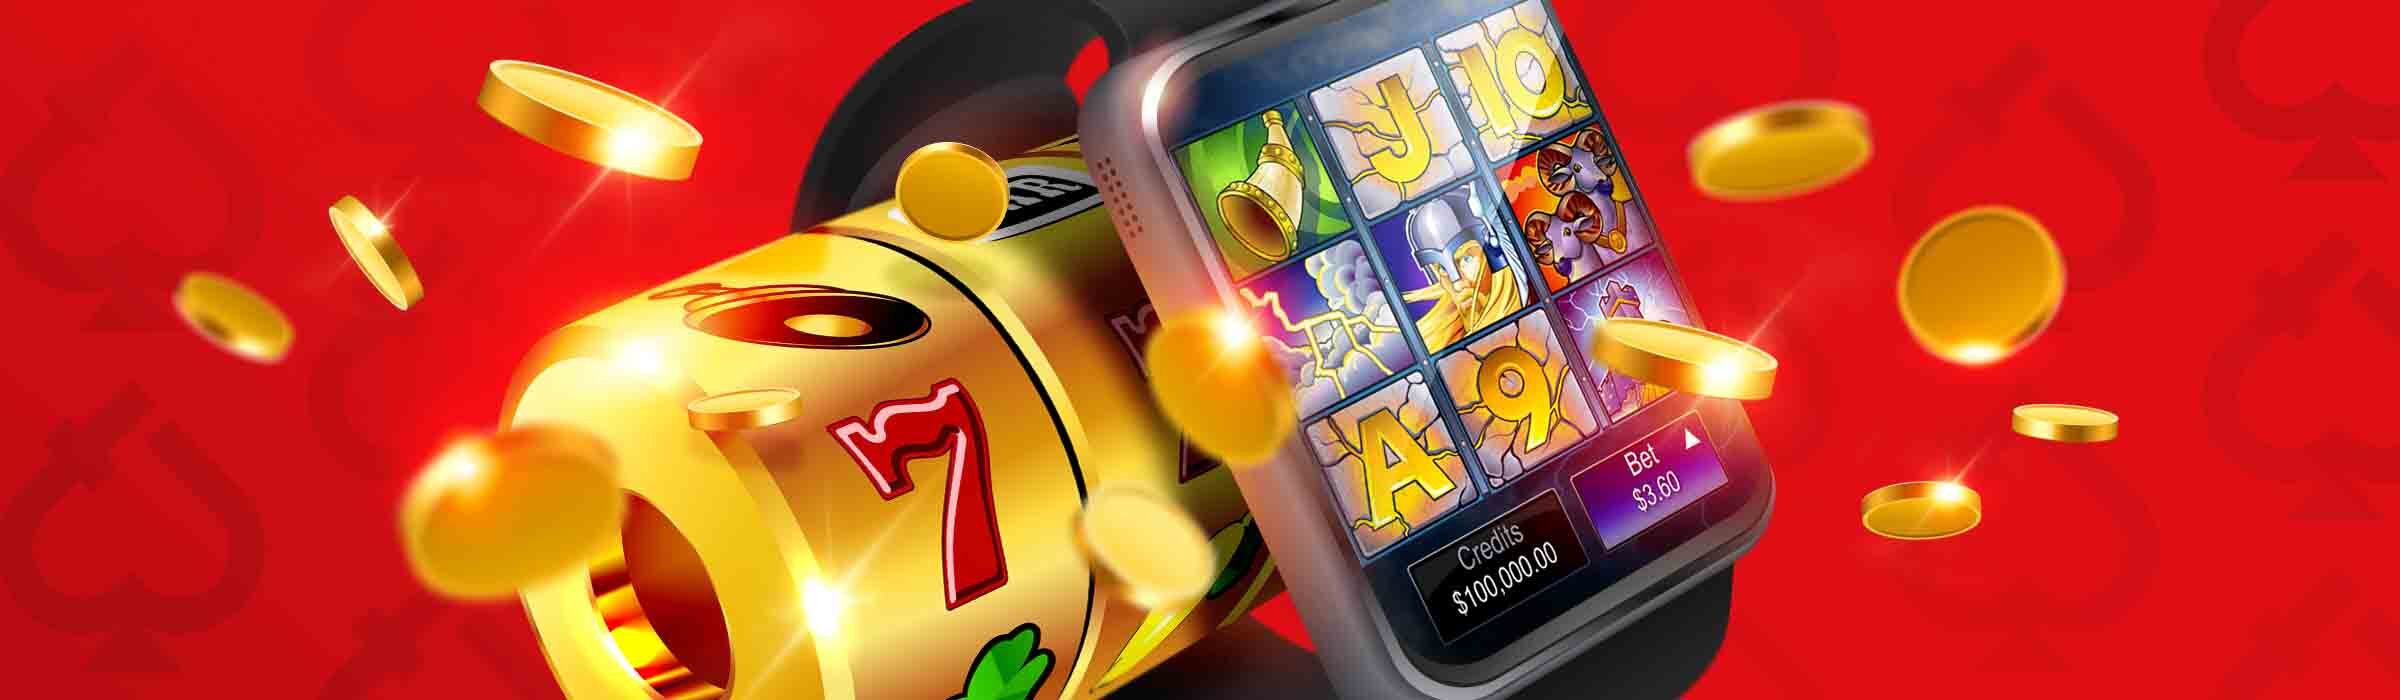 Is Smartwatch Gambling the Latest Trend in Online Casino Gambling